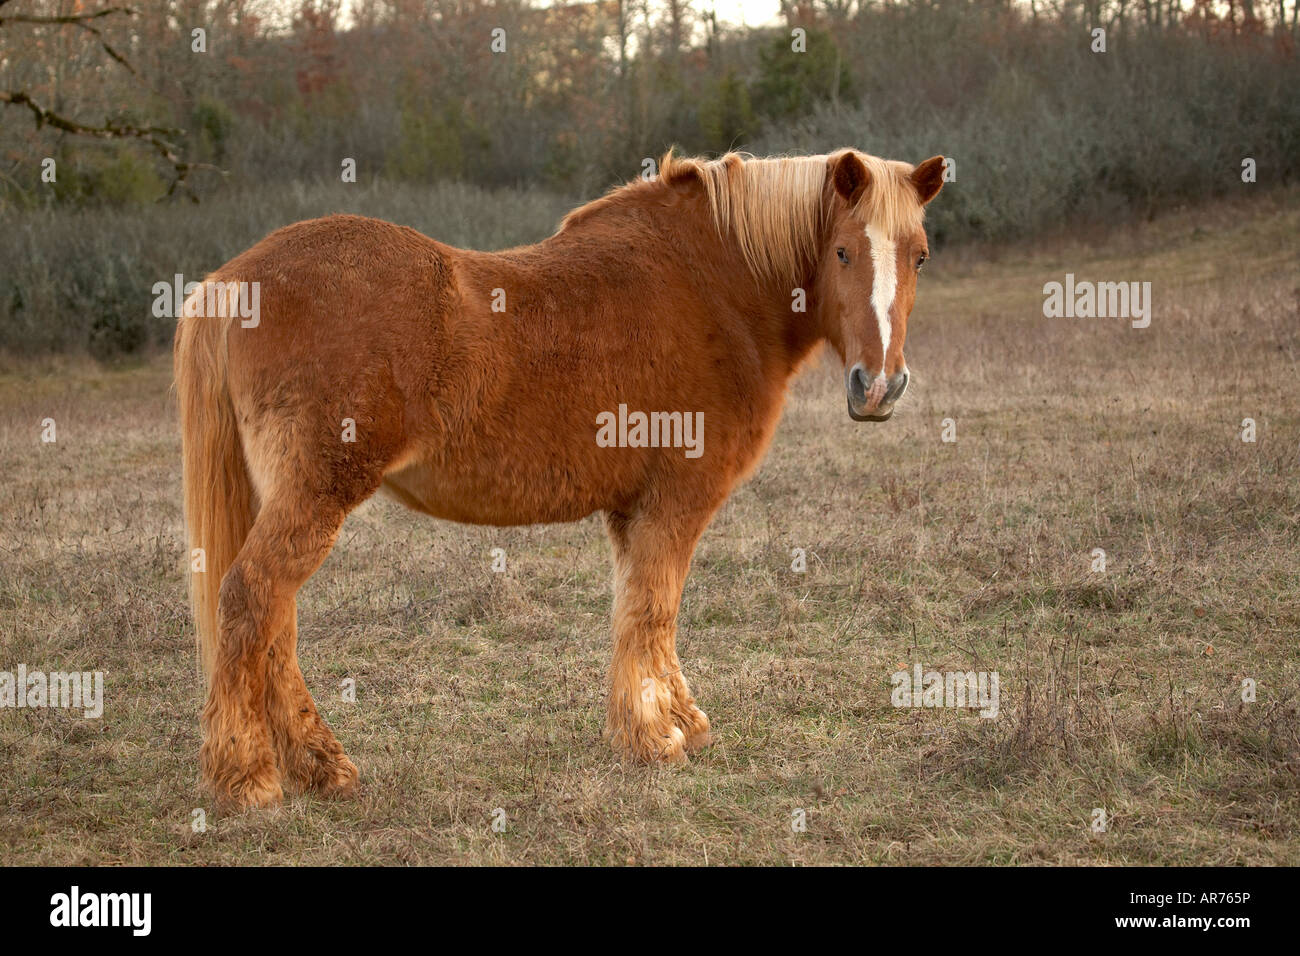 Draught horse Stock Photo